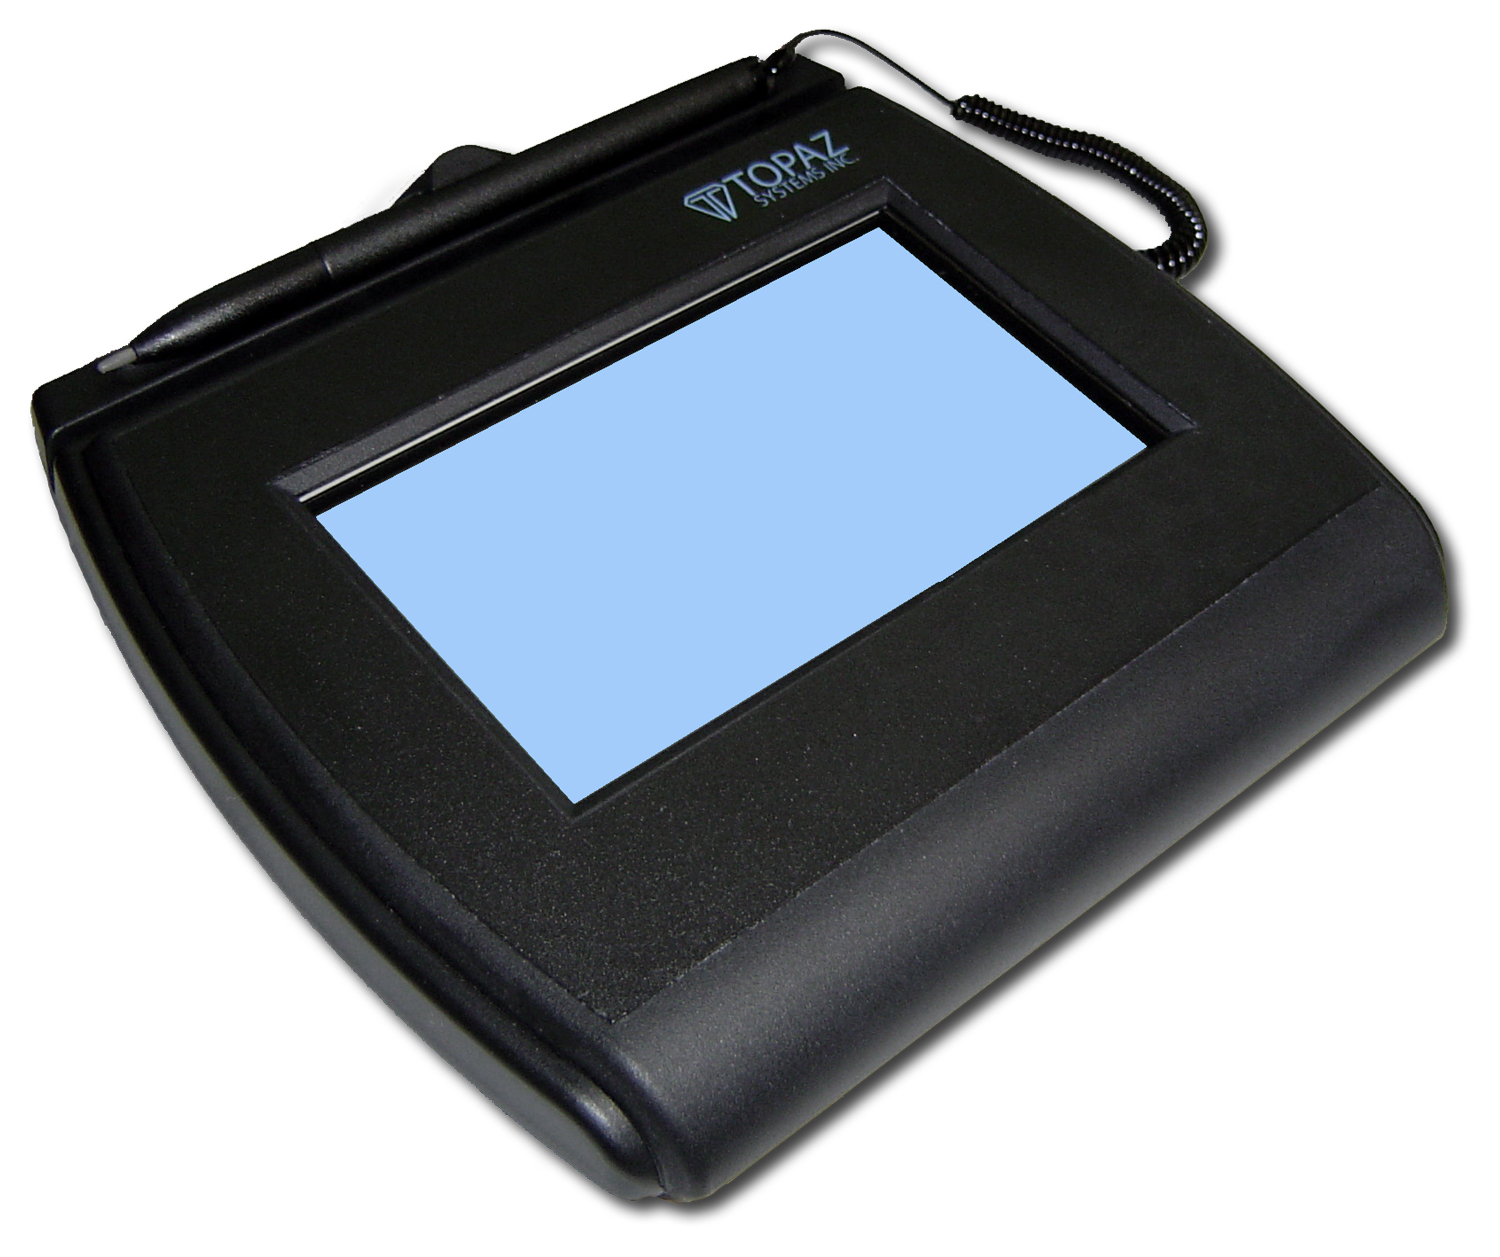 Topaz Signaturegem T-LBK755 4x3 LCD USB Signature Capture Pad T-LBK755SE-BBSB-R